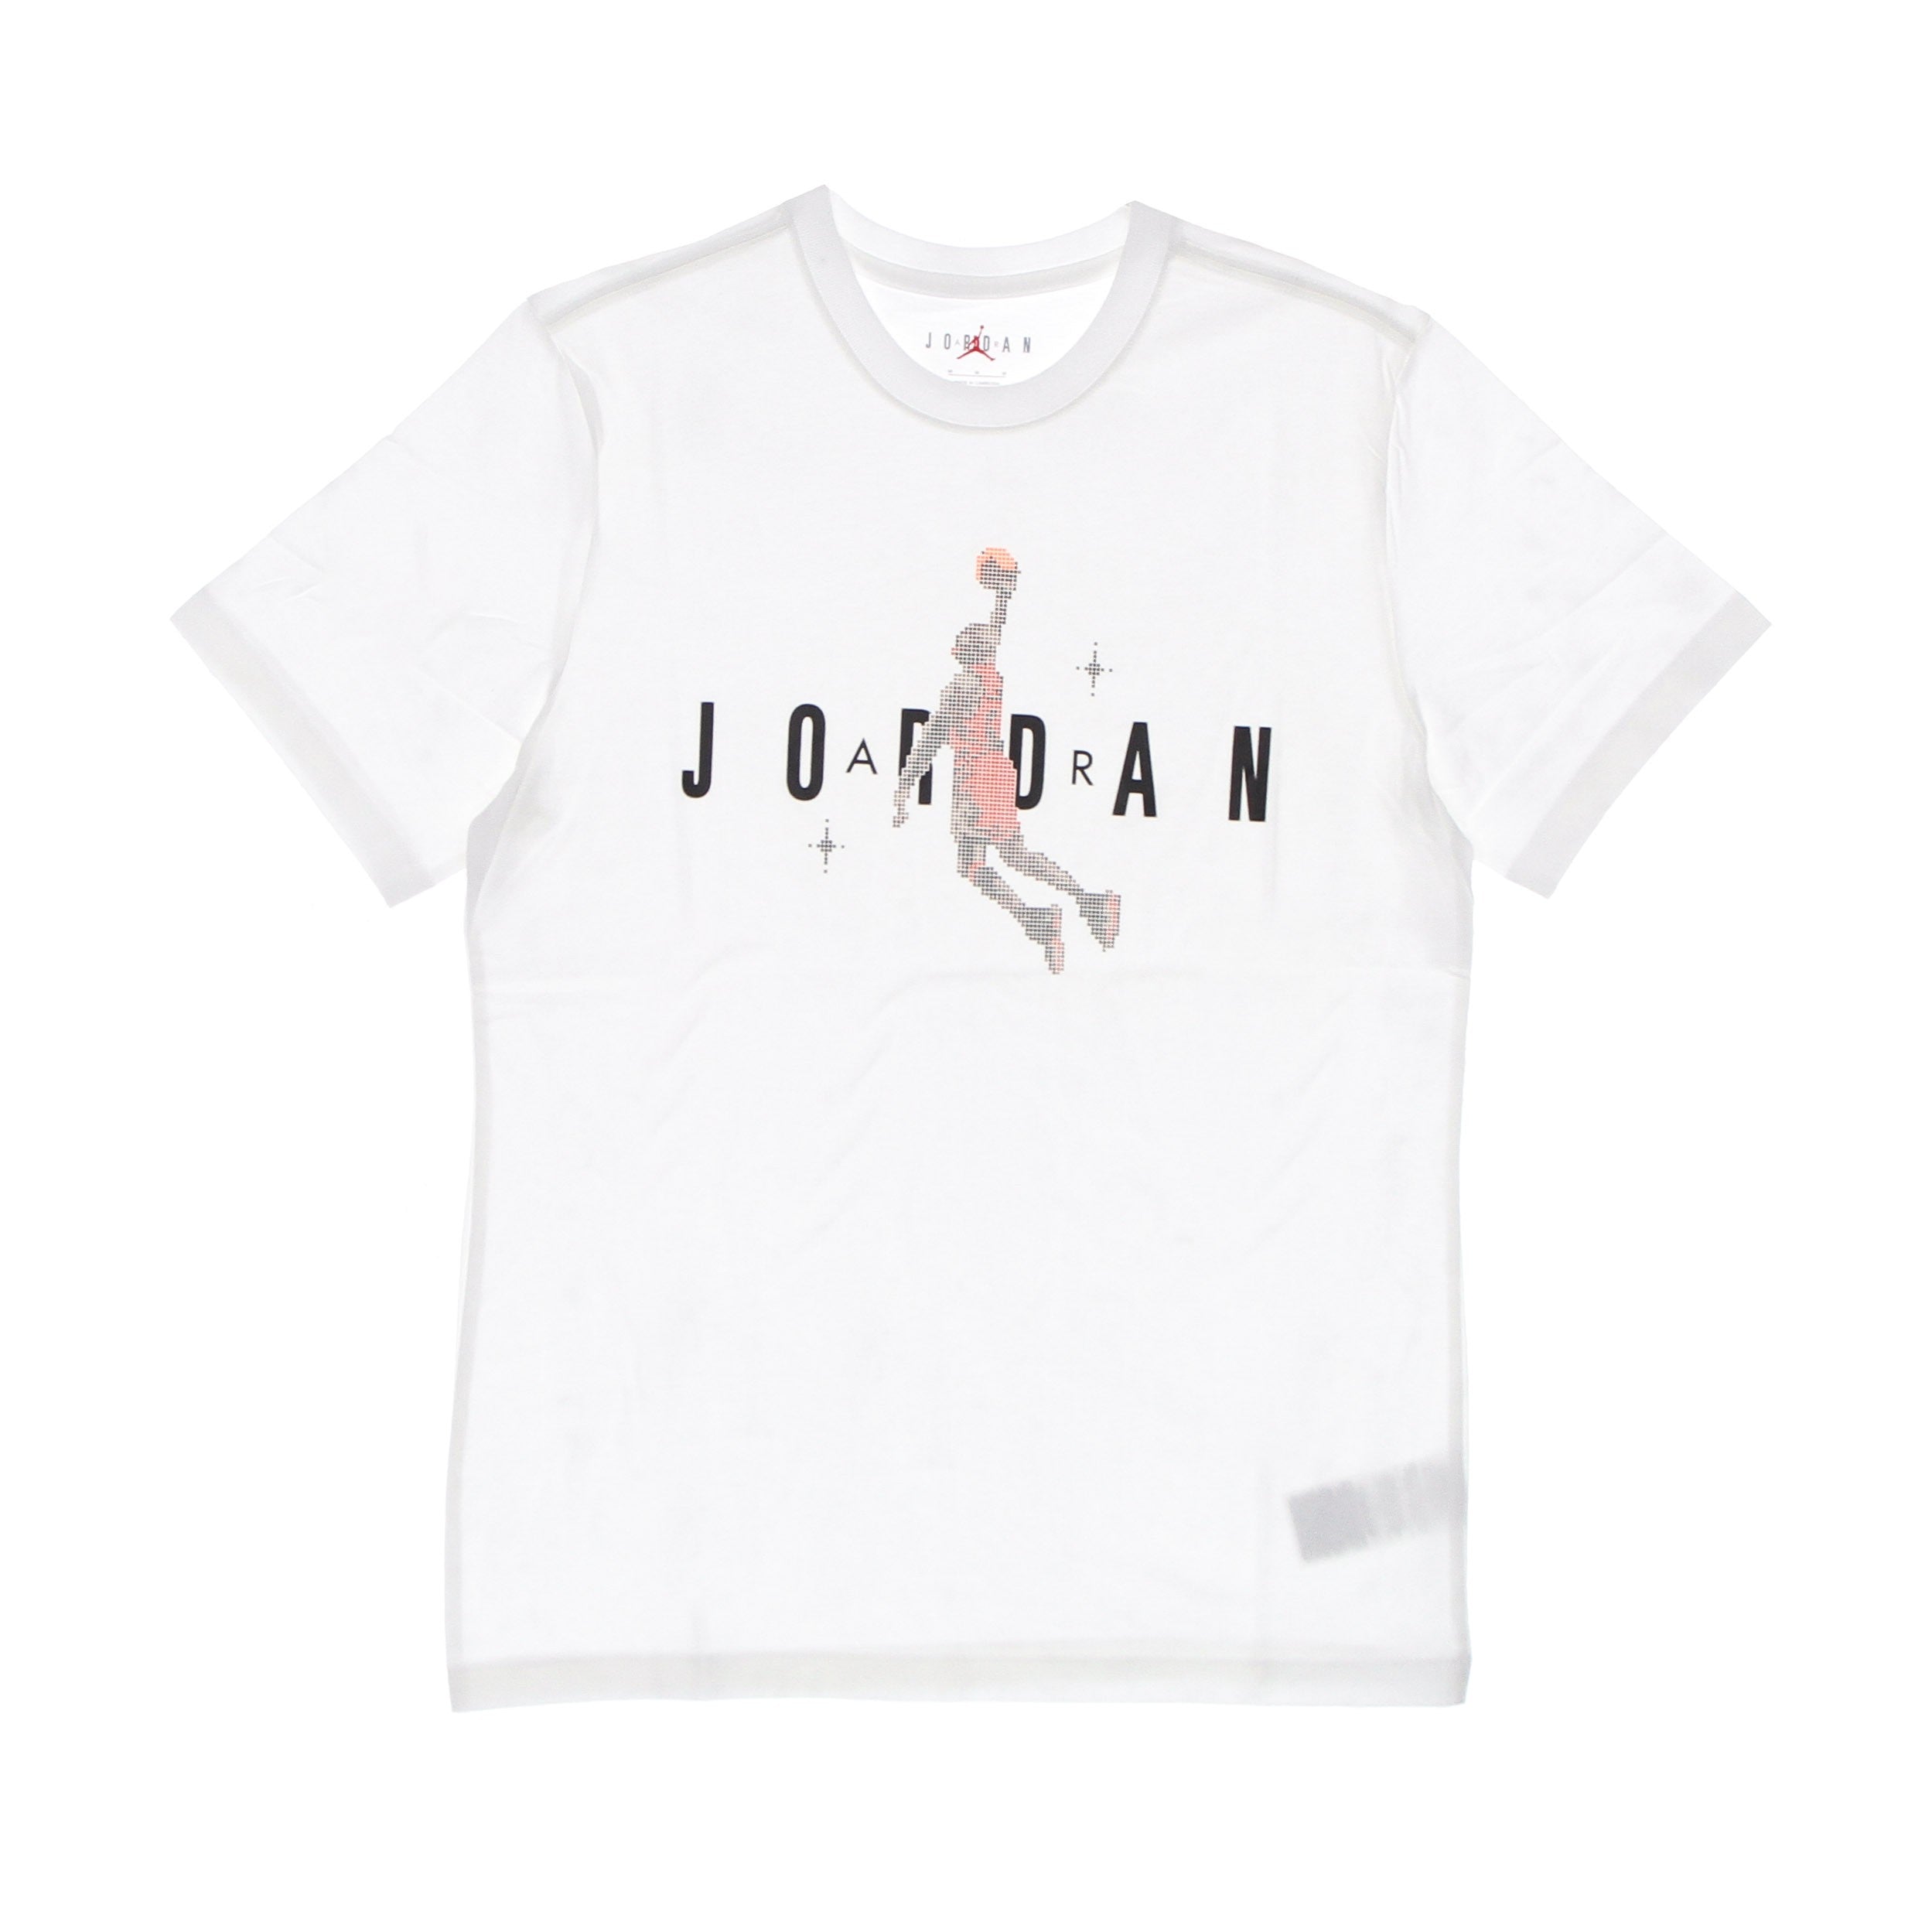 Jordan, Maglietta Uomo Brand Holiday Tee, White/black